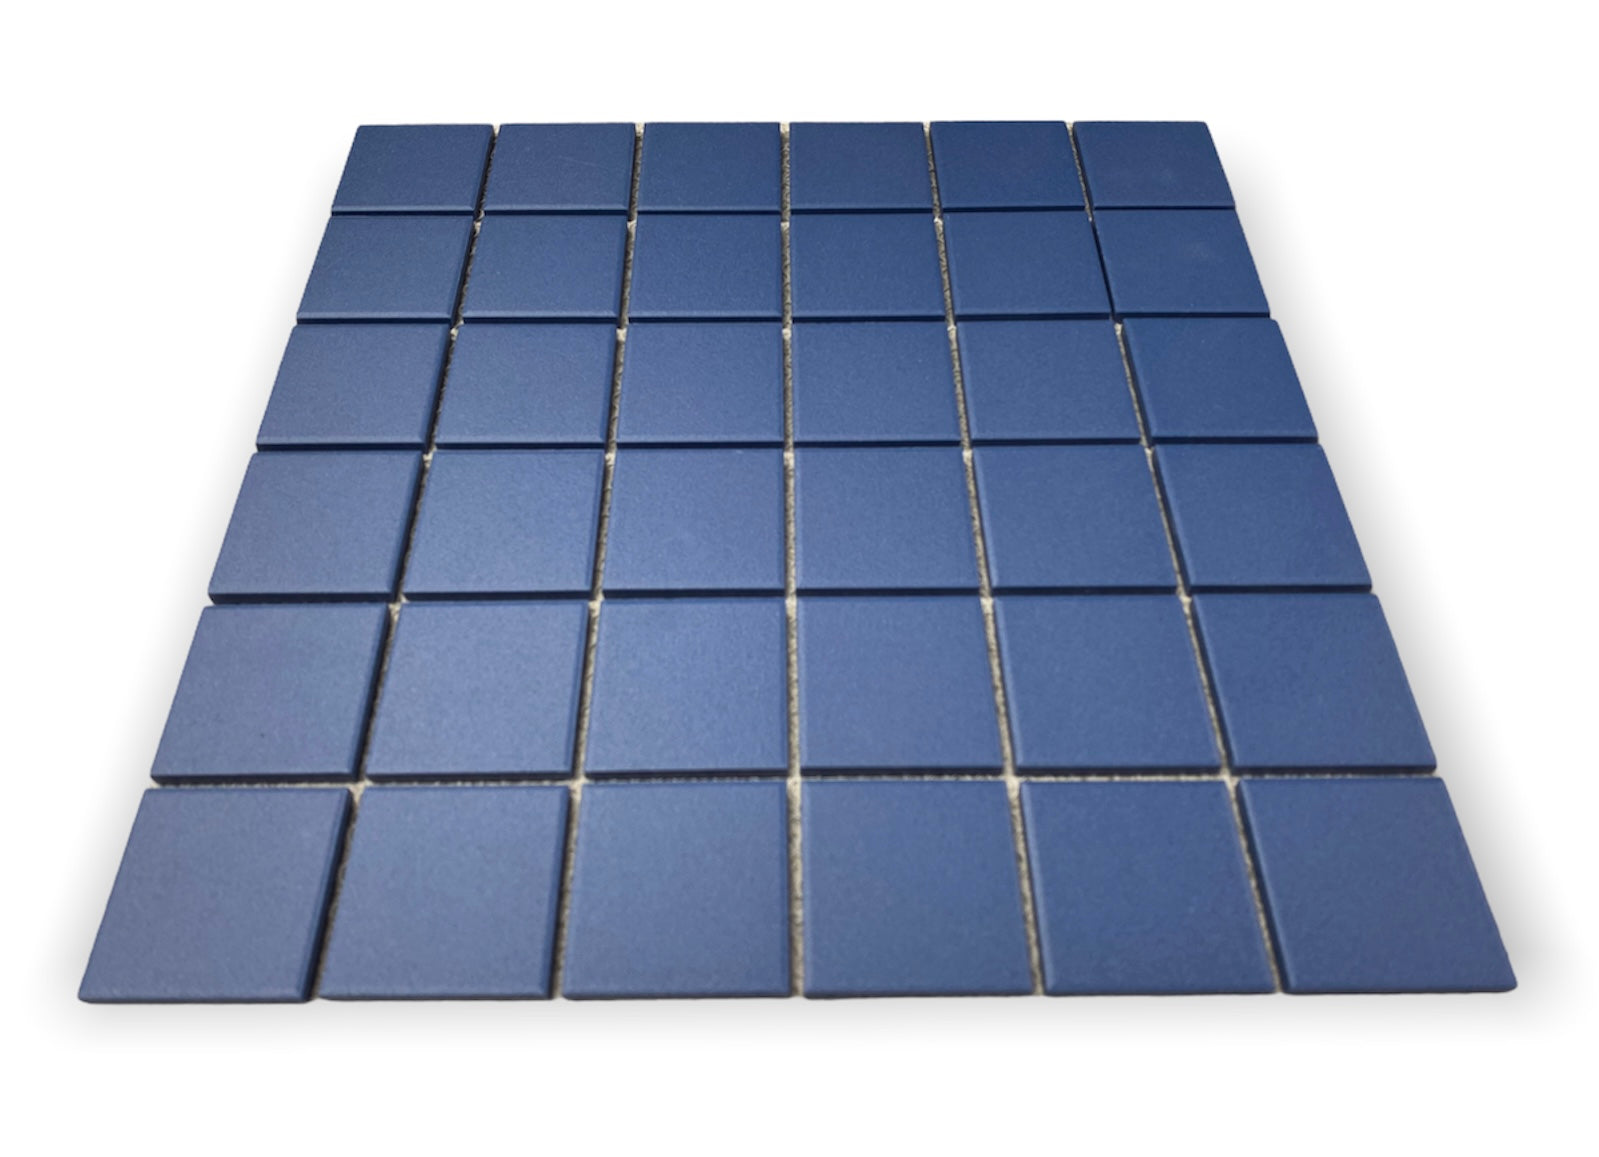 TDPW-UGRB2X2-401 Blue Jay Porcelain 1-7/8 Inch Square Unglazed Finish Mosaic Tile for Bathroom Floors, Walls, Kitchen Backsplash and Pool - (5 Pack Set - 5 Sheets)